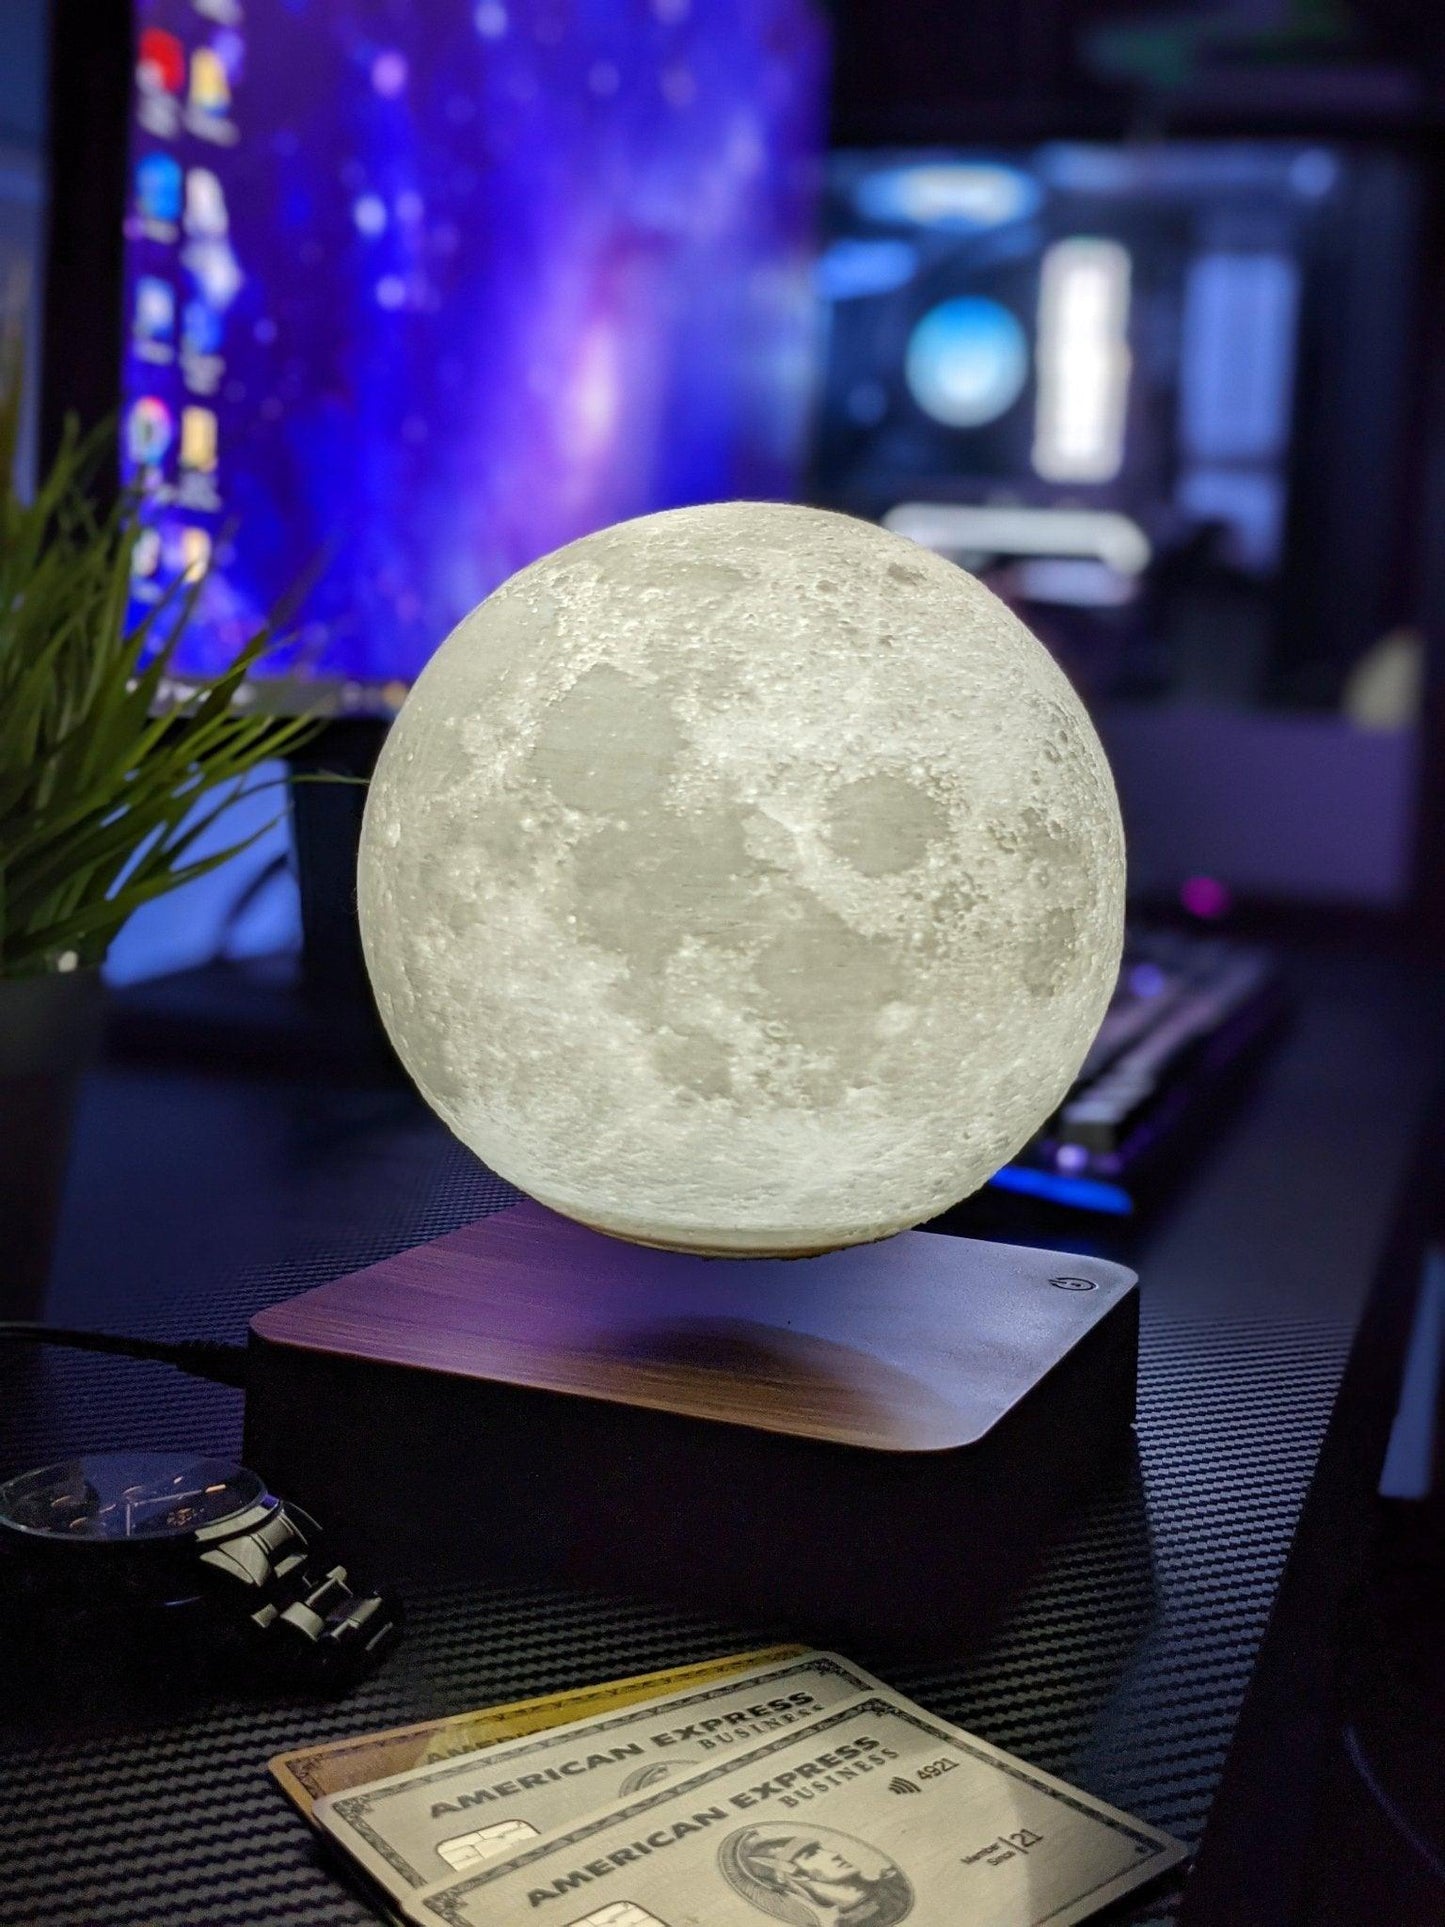  Levitating Moon Lamp sold by Fleurlovin, Free Shipping Worldwide